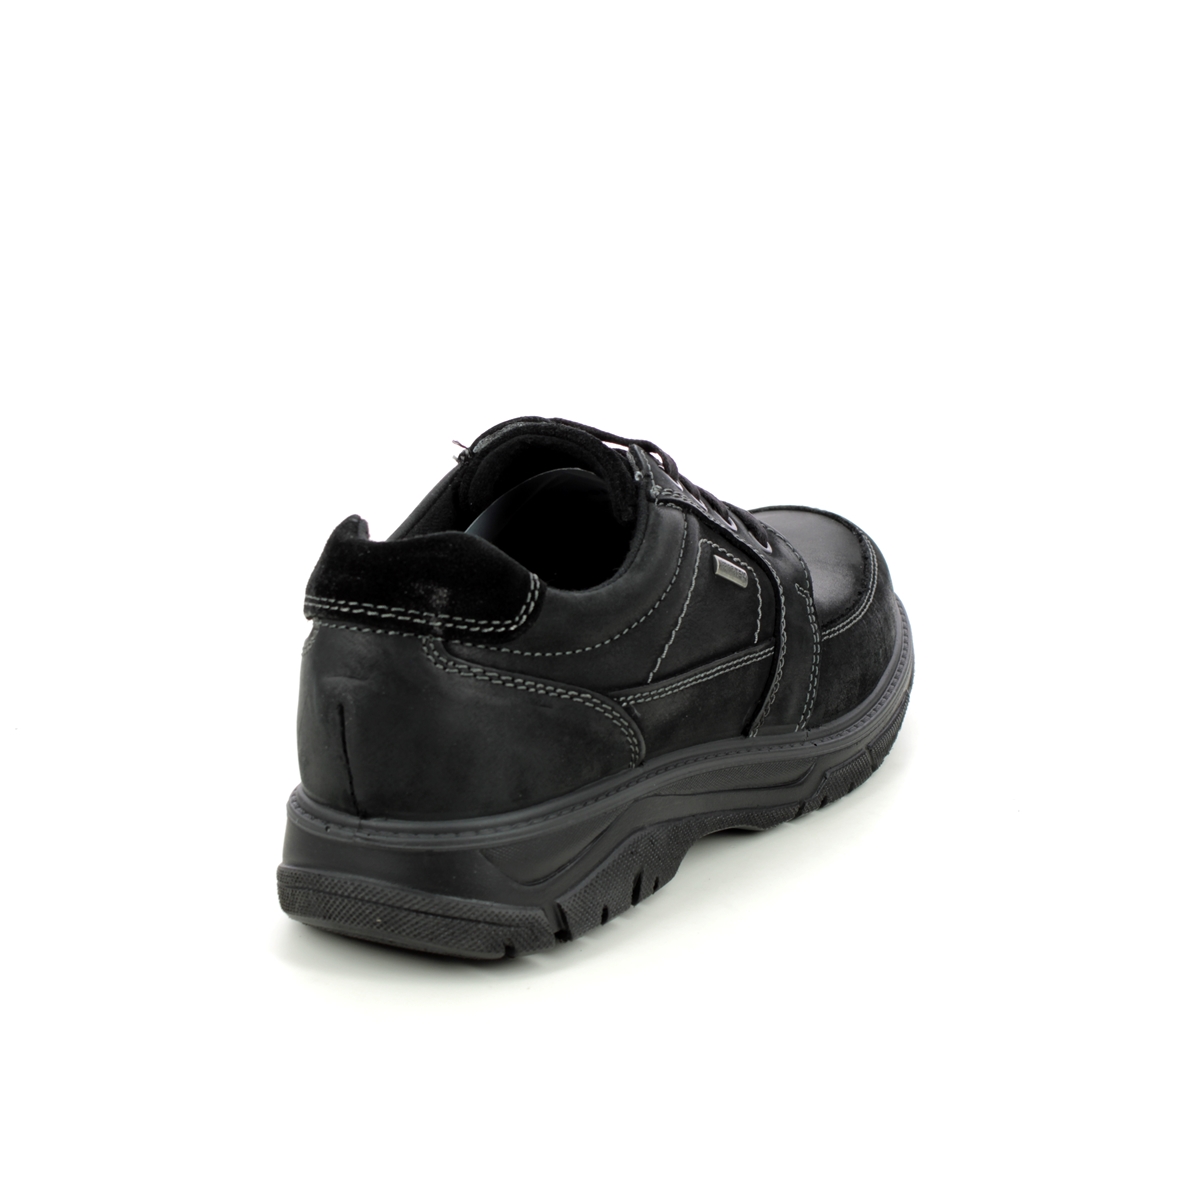 IMAC Hank Unease Tex 2468-3500011 Black leather comfort shoes